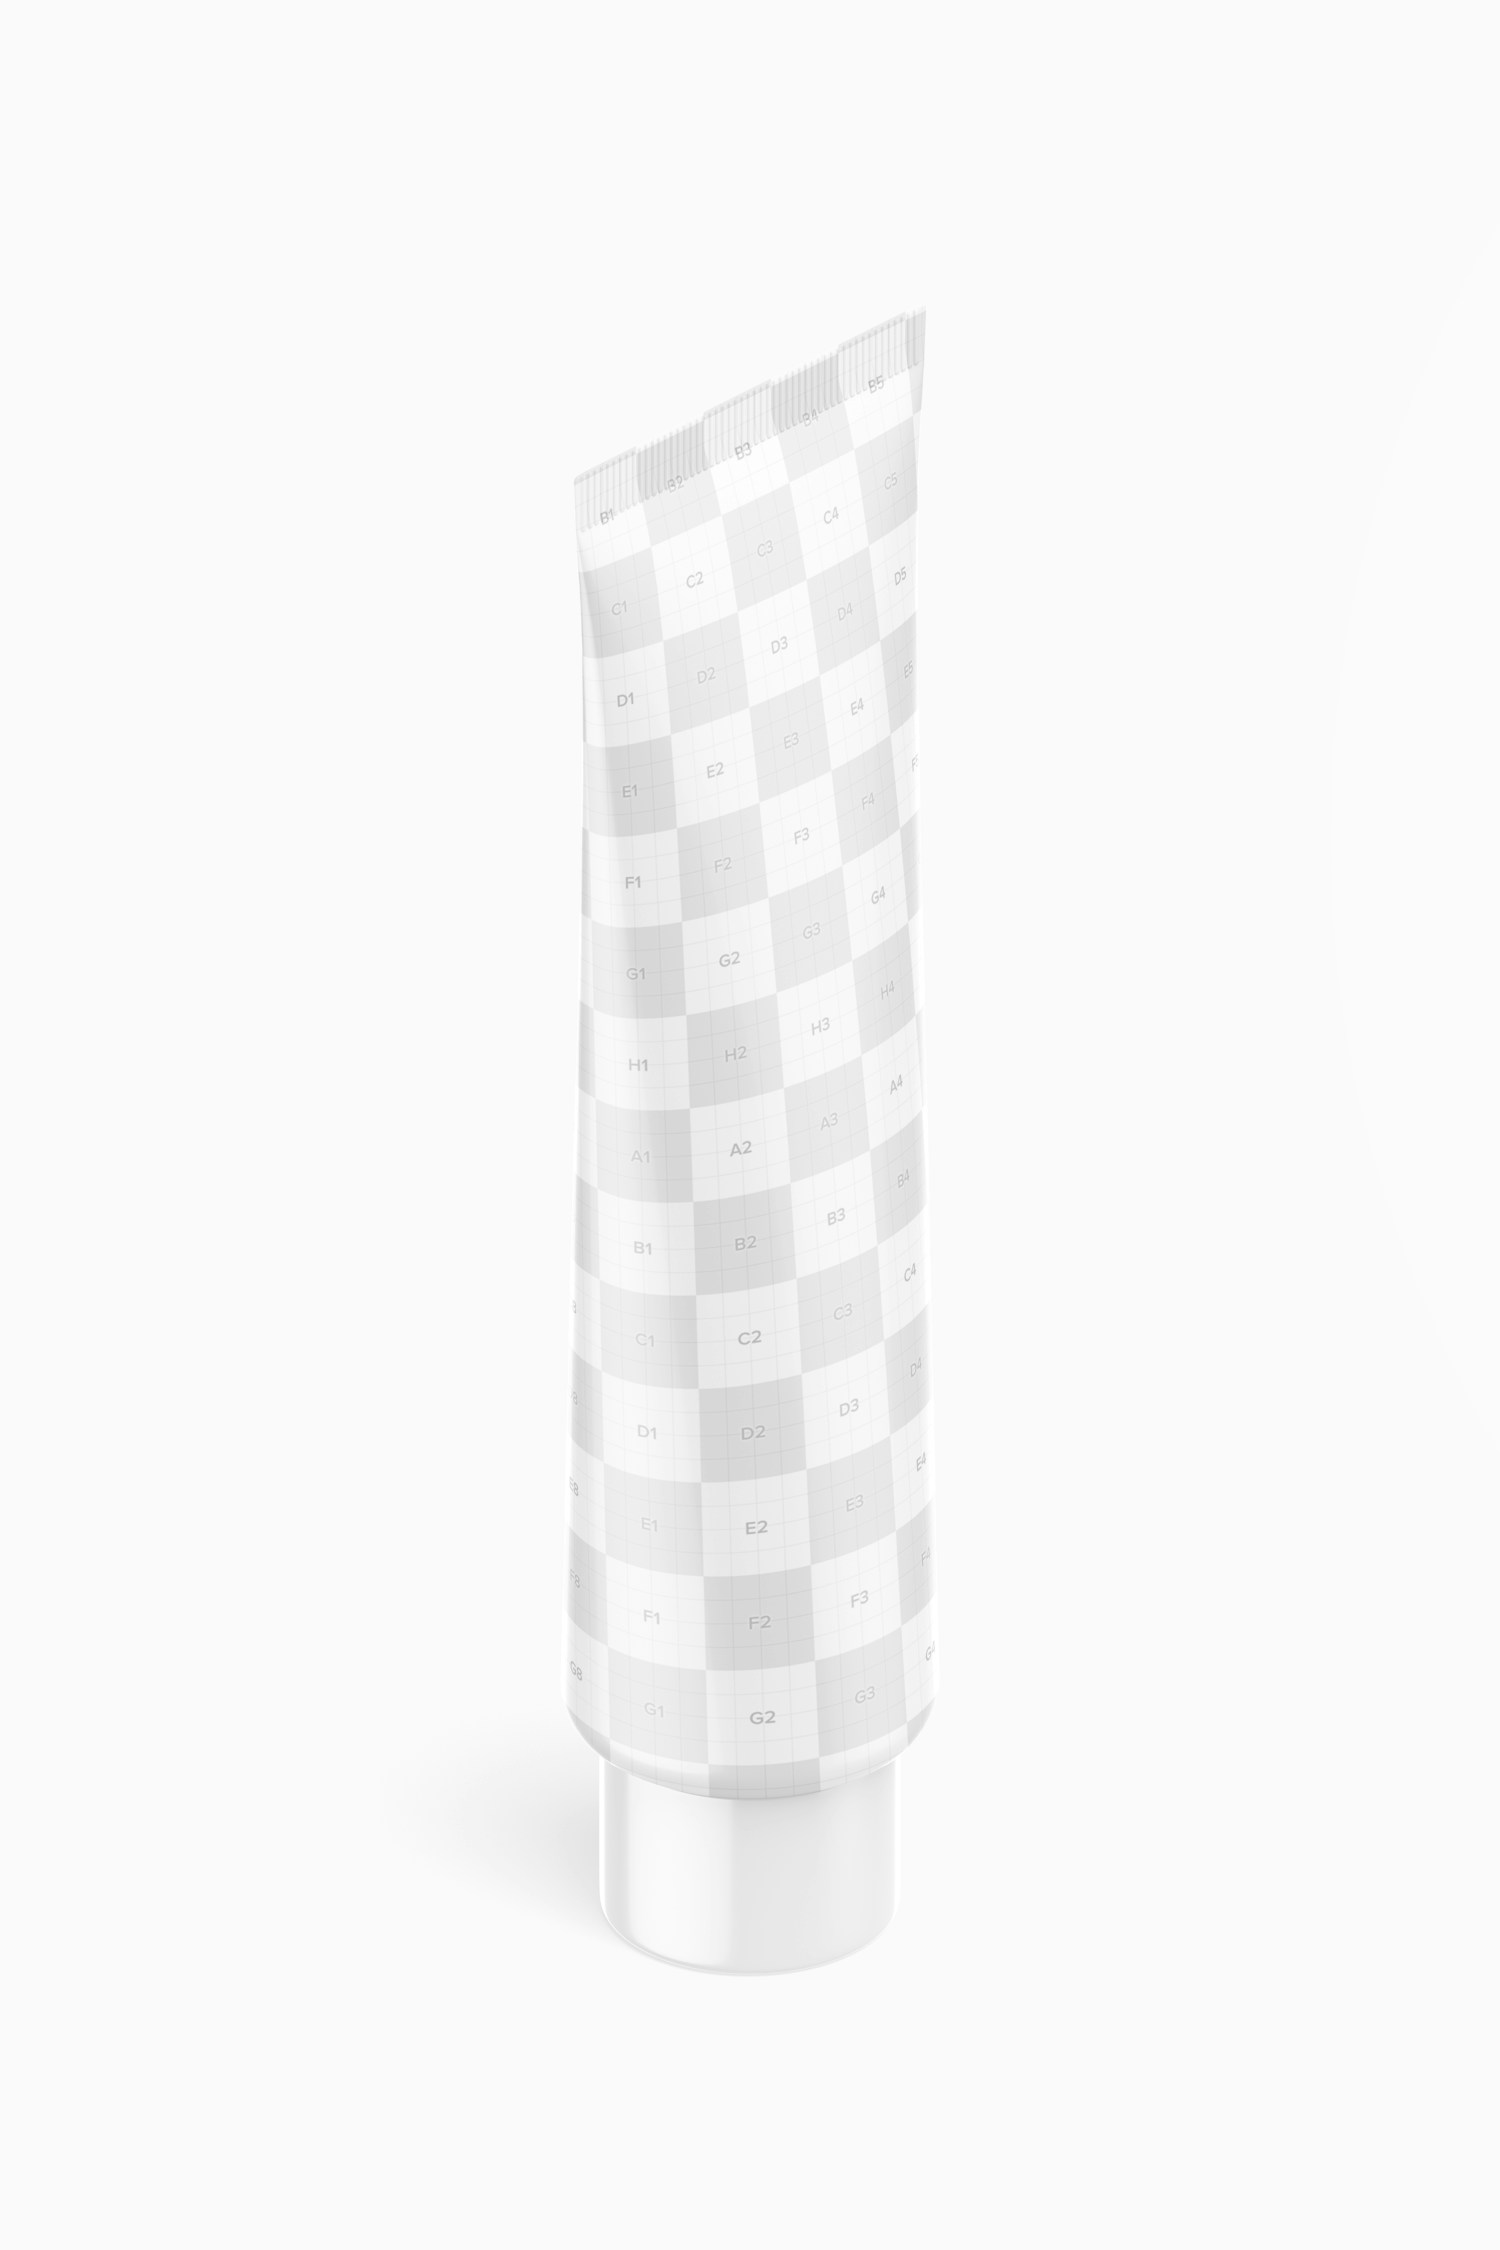 Maqueta de Tubo de Crema de 1.4 oz, Vista Isométrica